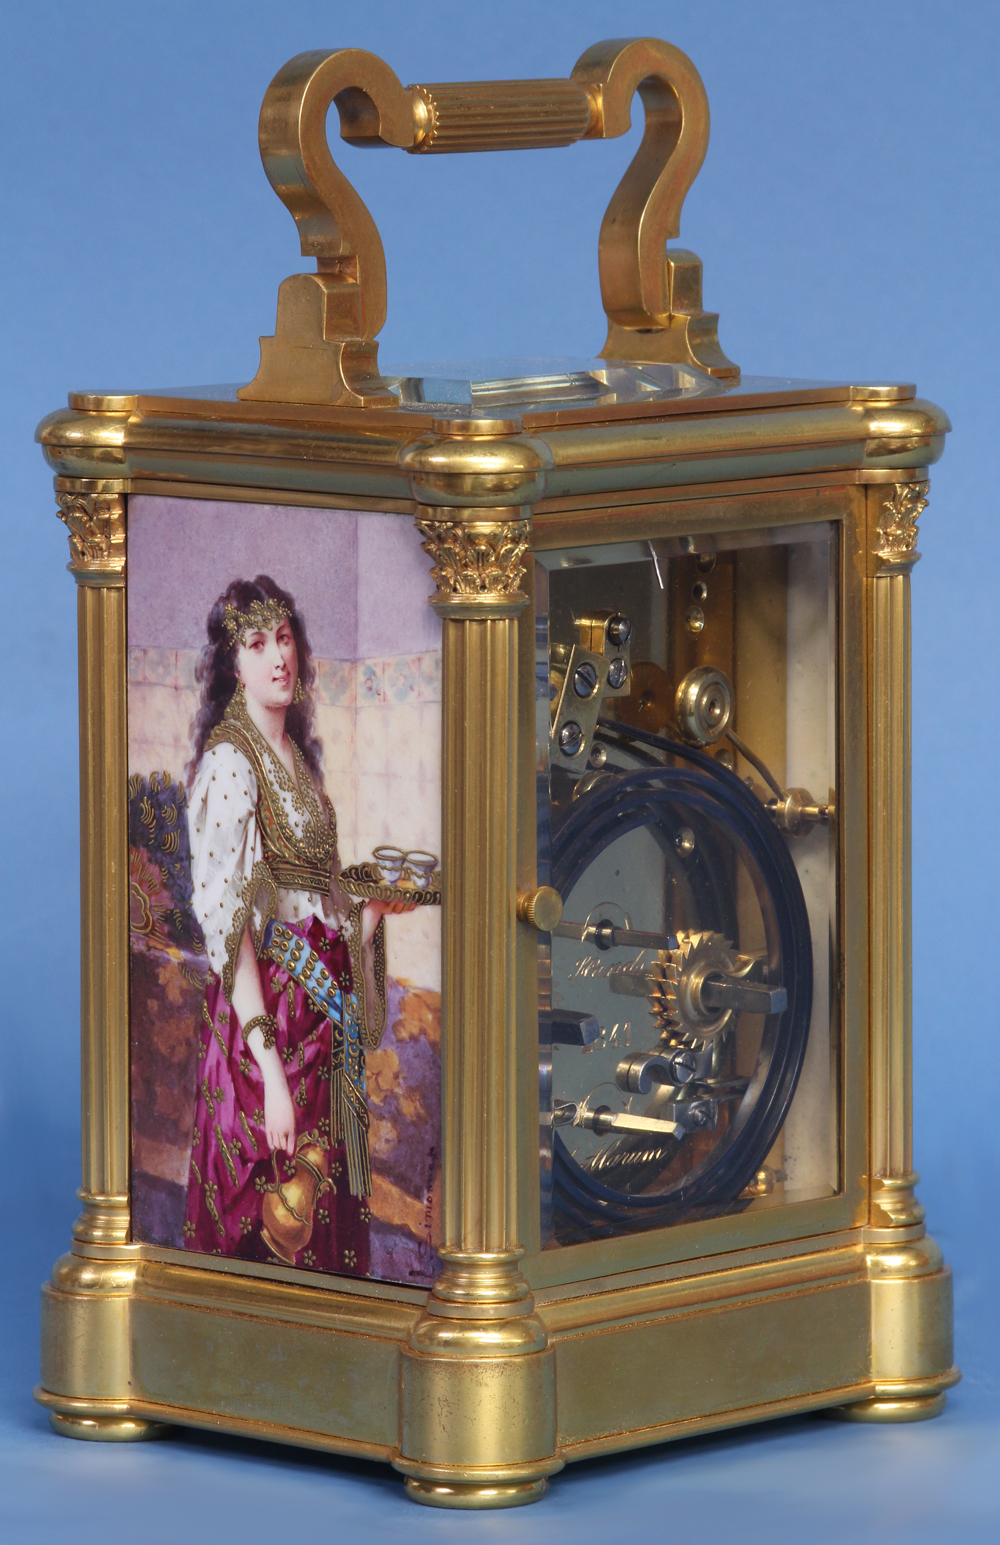 Carriage Clock with Porcelain Panels by L. Simonnet.